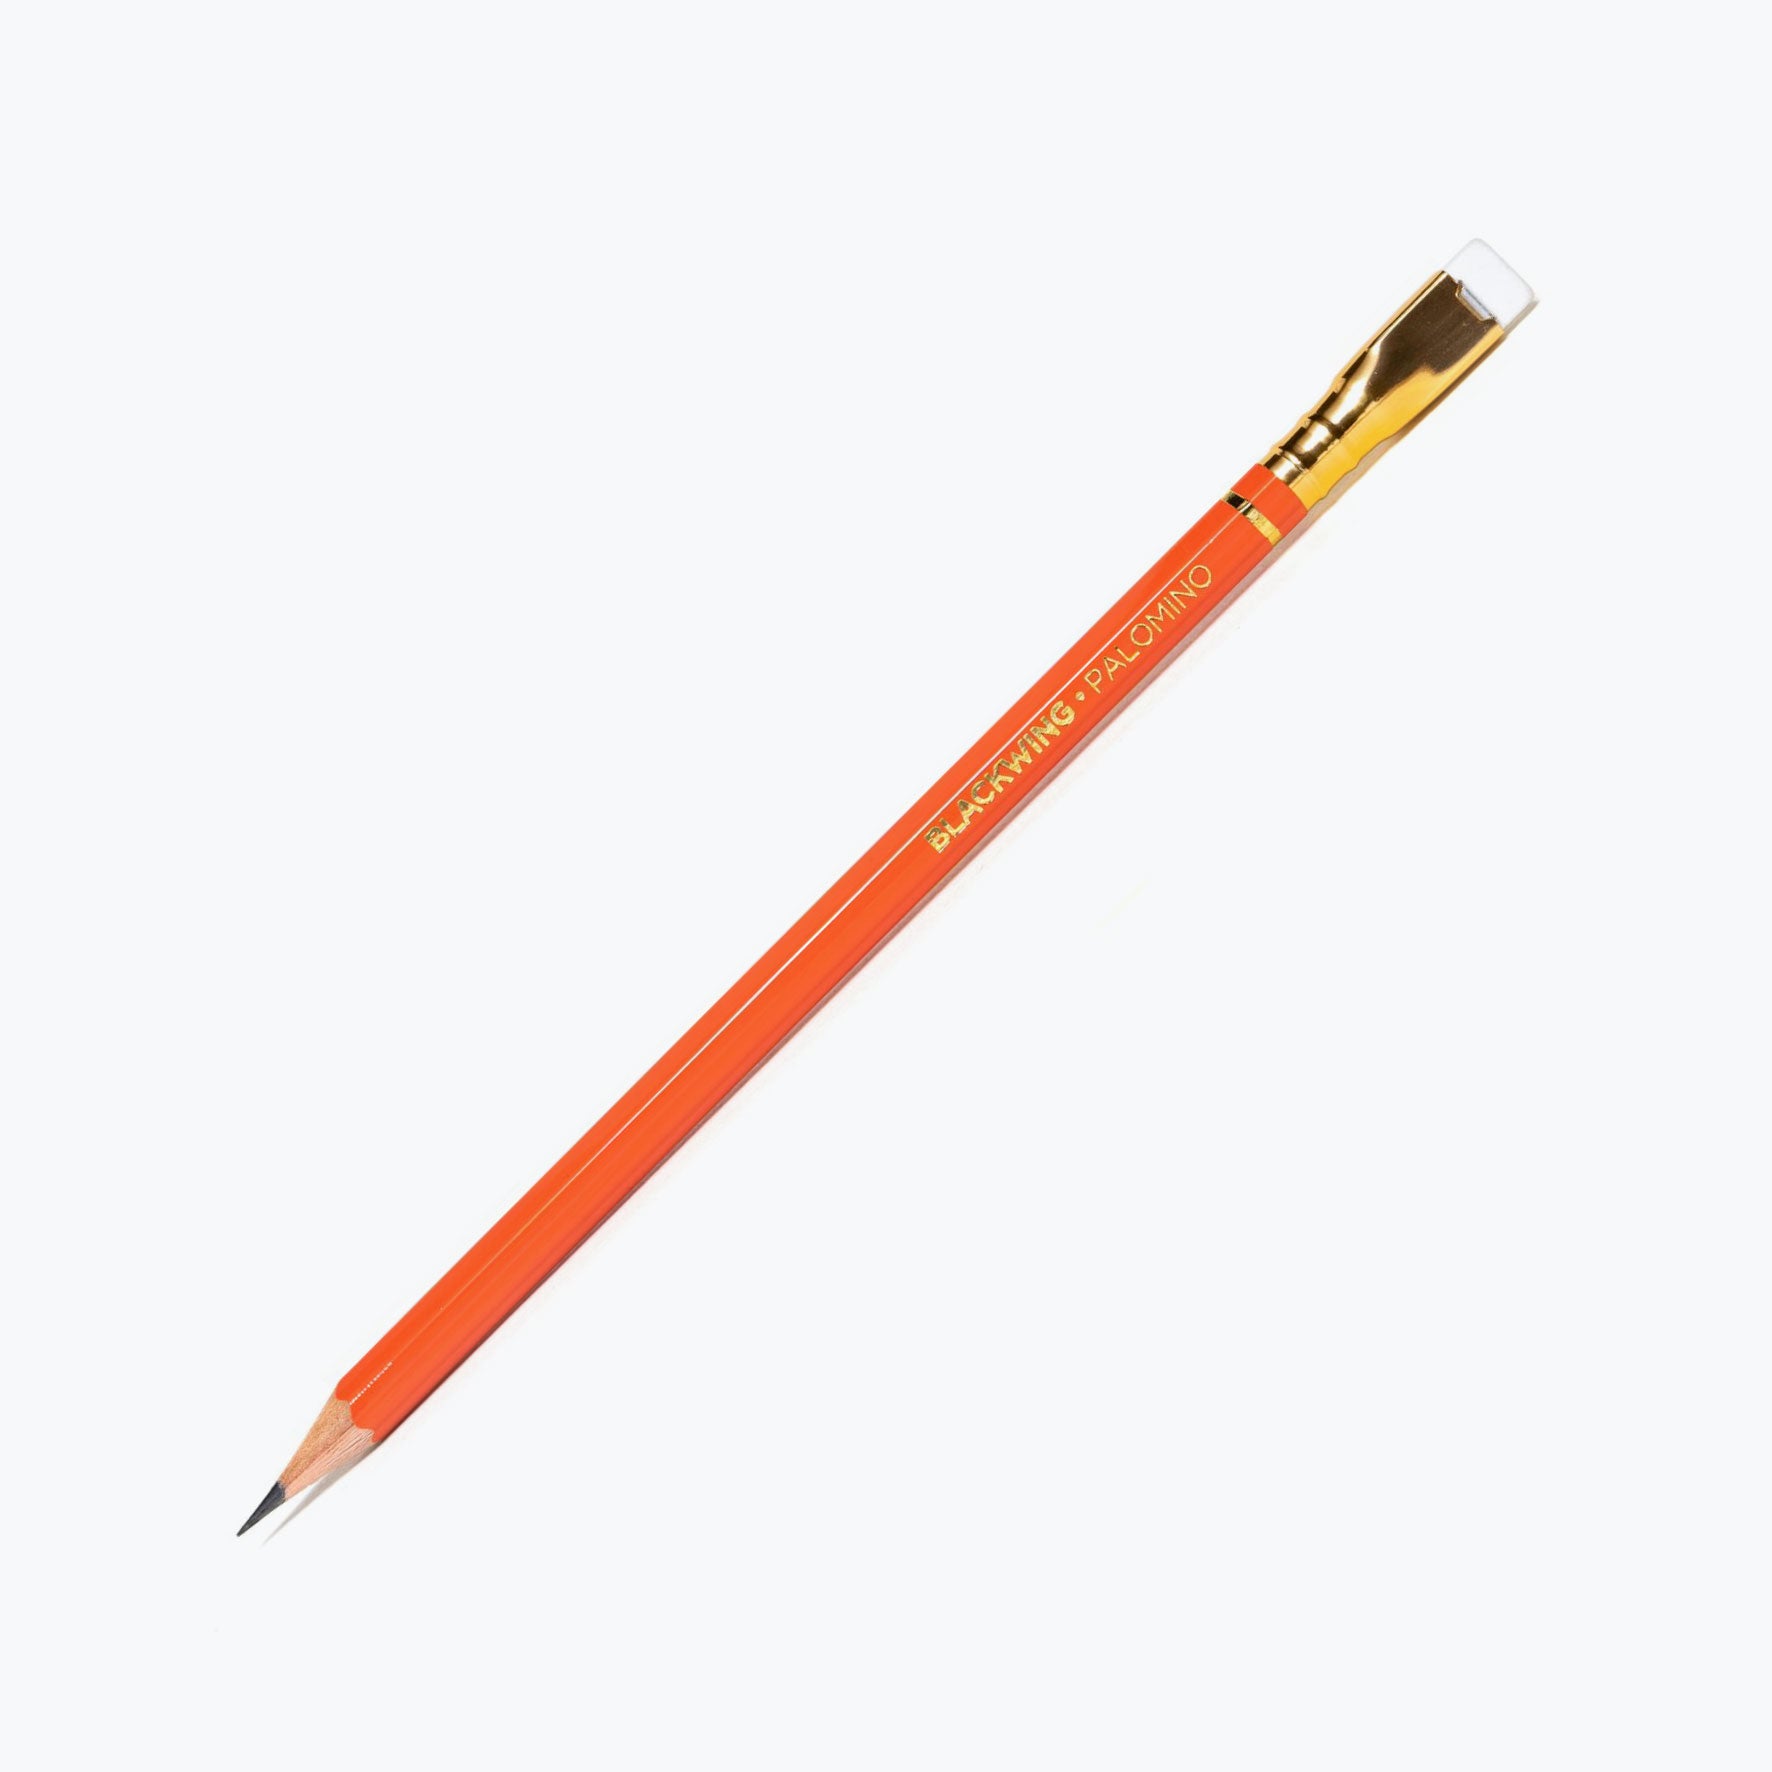 Palomino Blackwing - Pencil - Blackwing Eras 2 - Orange - Pack of 2 (Limited Edition)